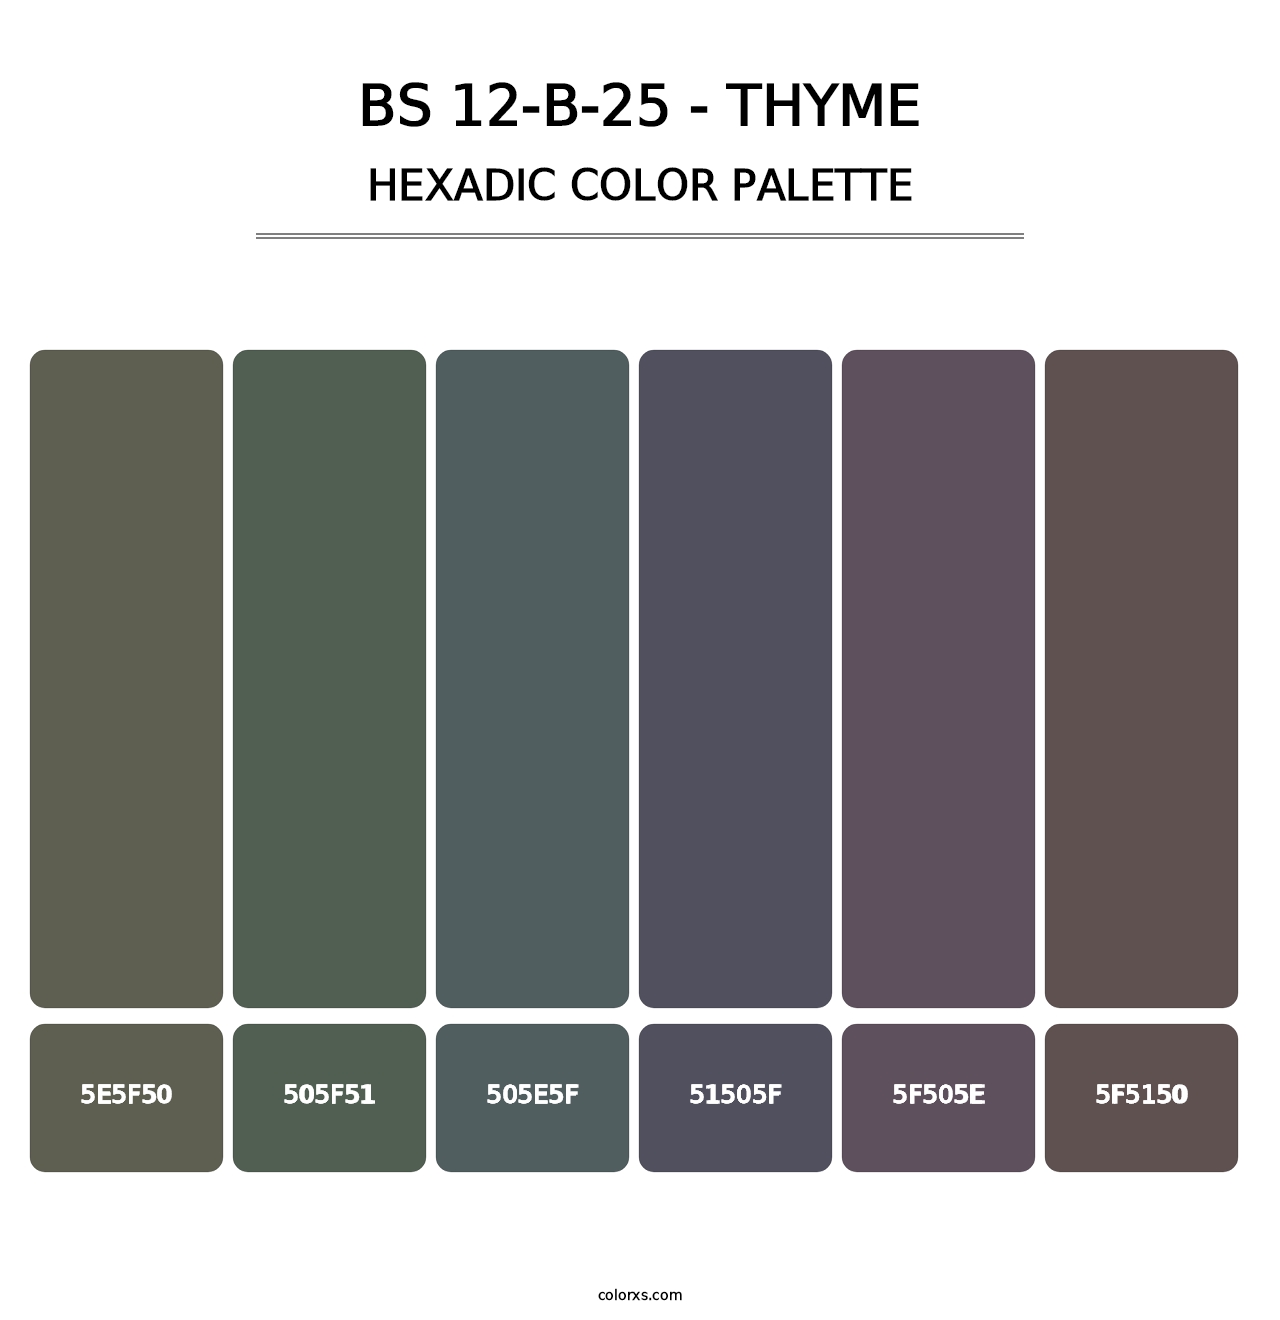 BS 12-B-25 - Thyme - Hexadic Color Palette